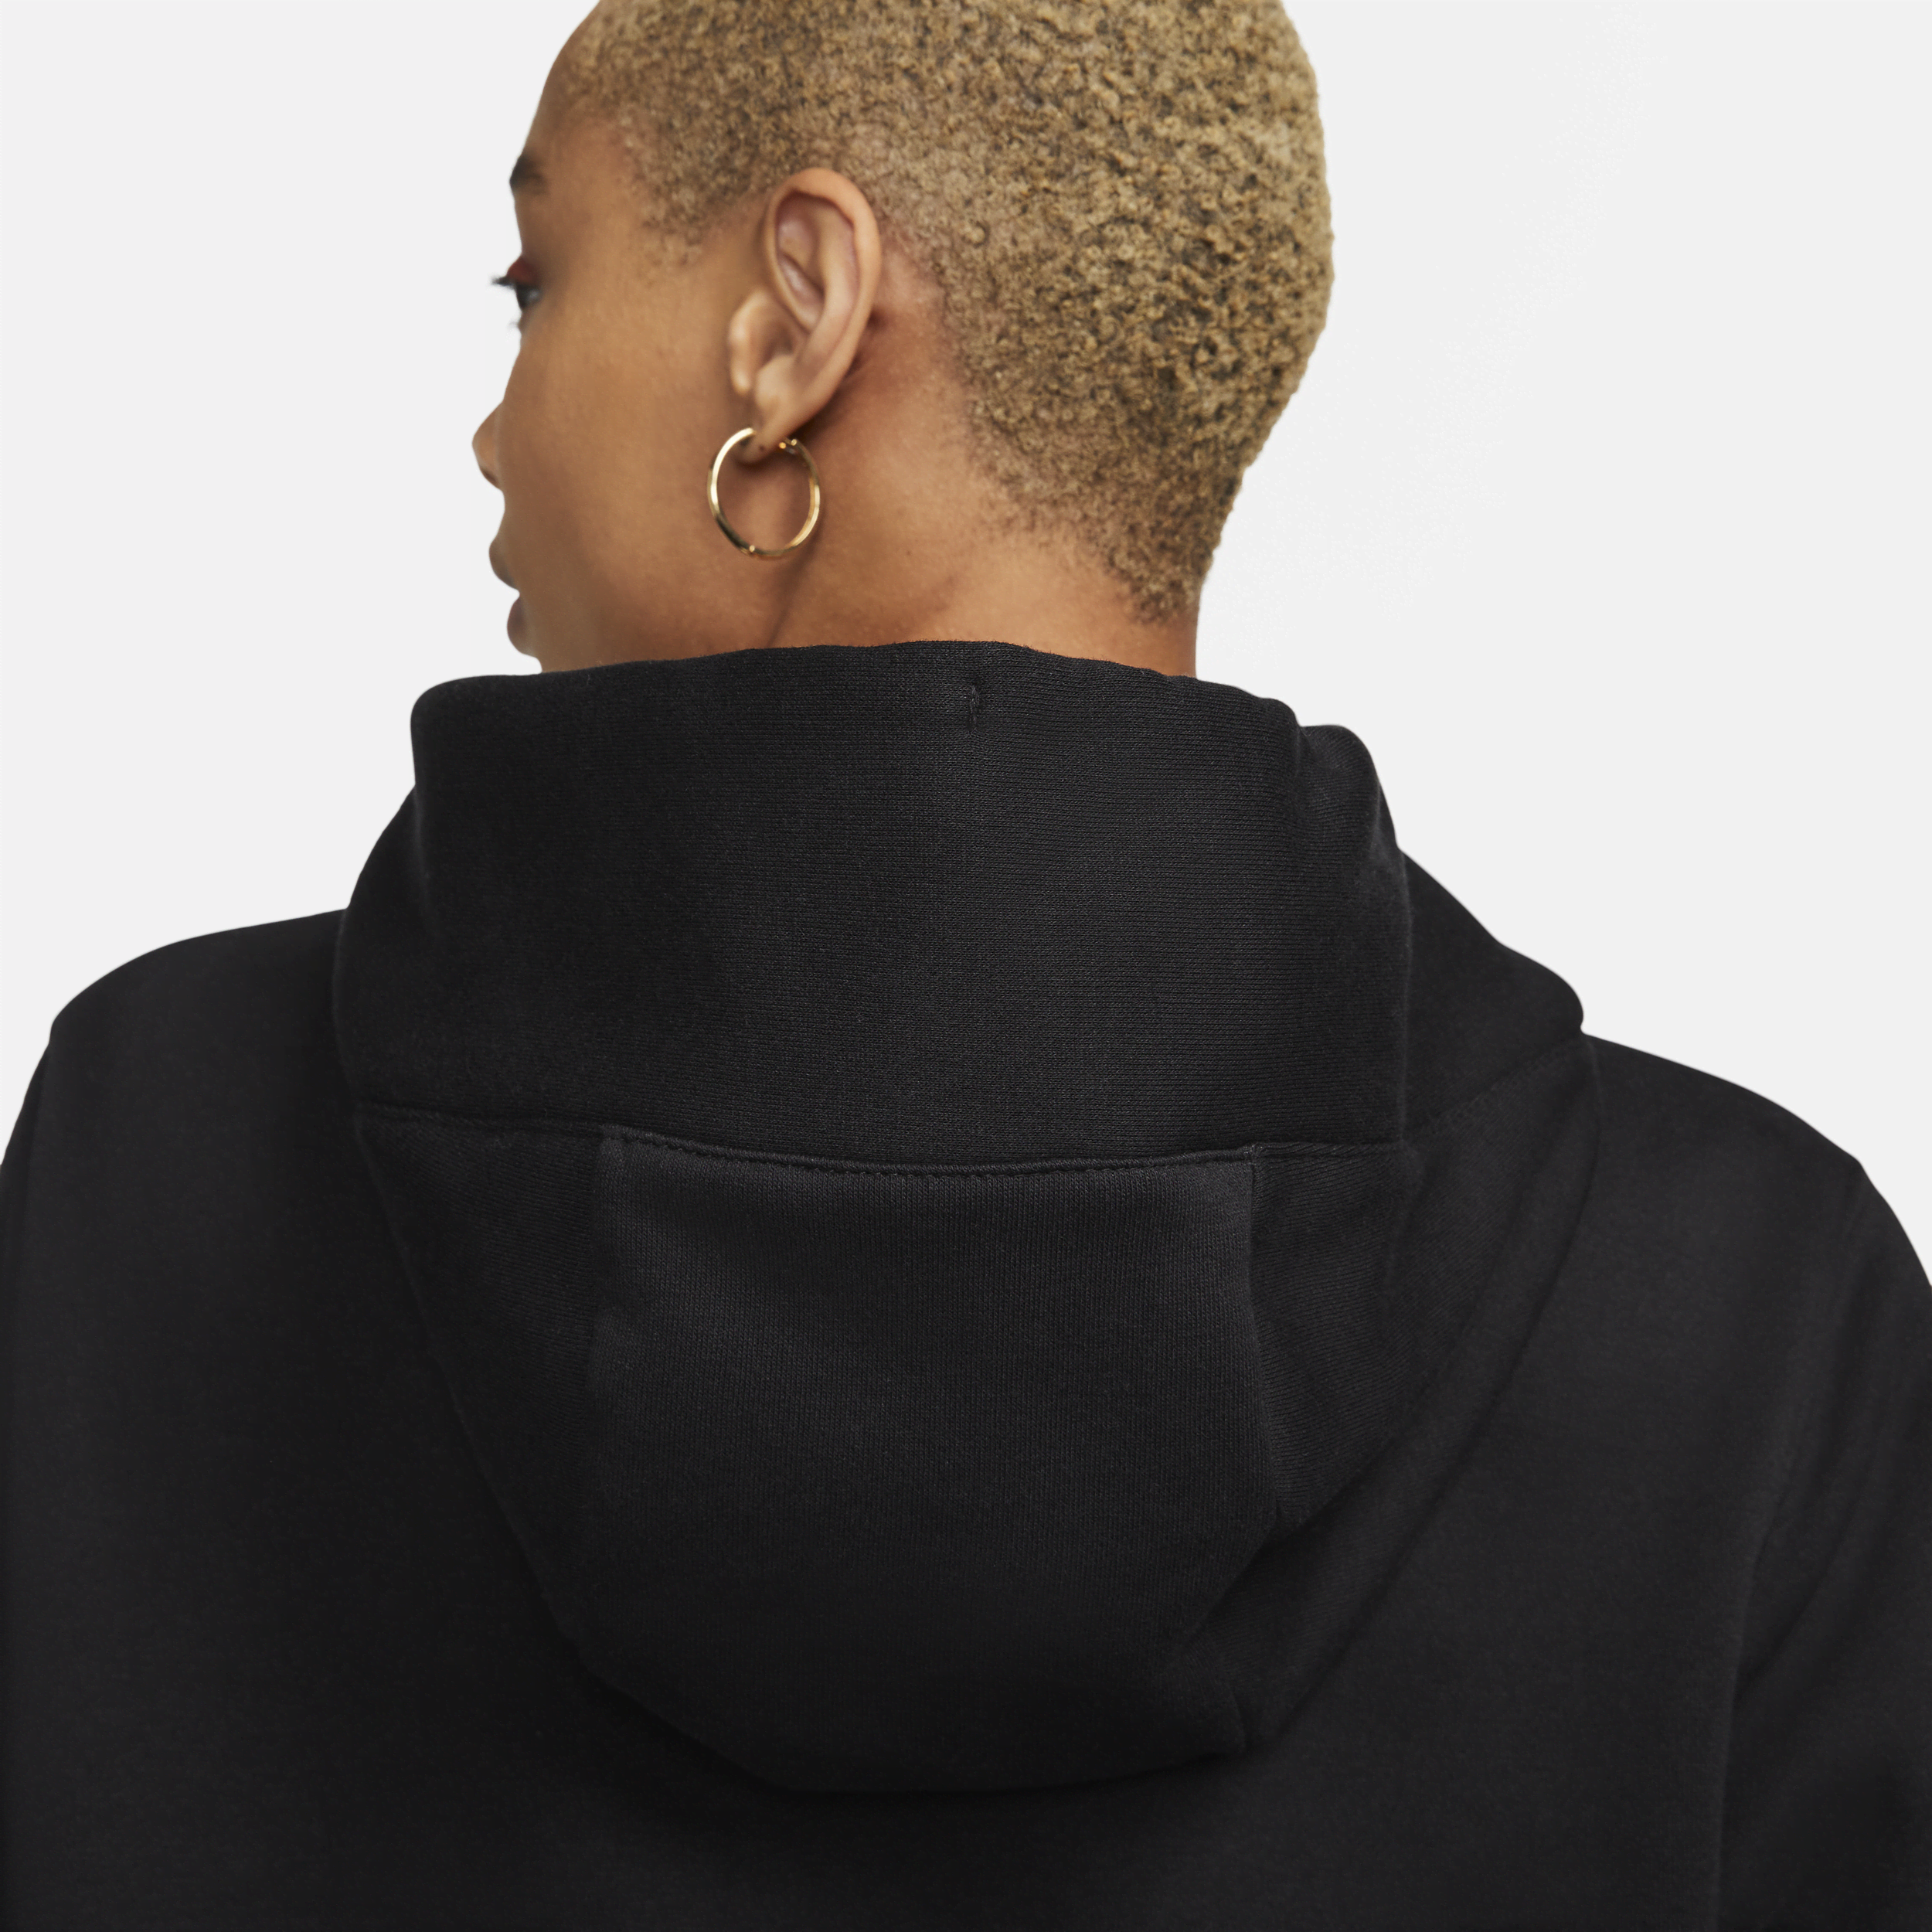 Nike Sportswear Phoenix Fleece hoodie voor dames Zwart